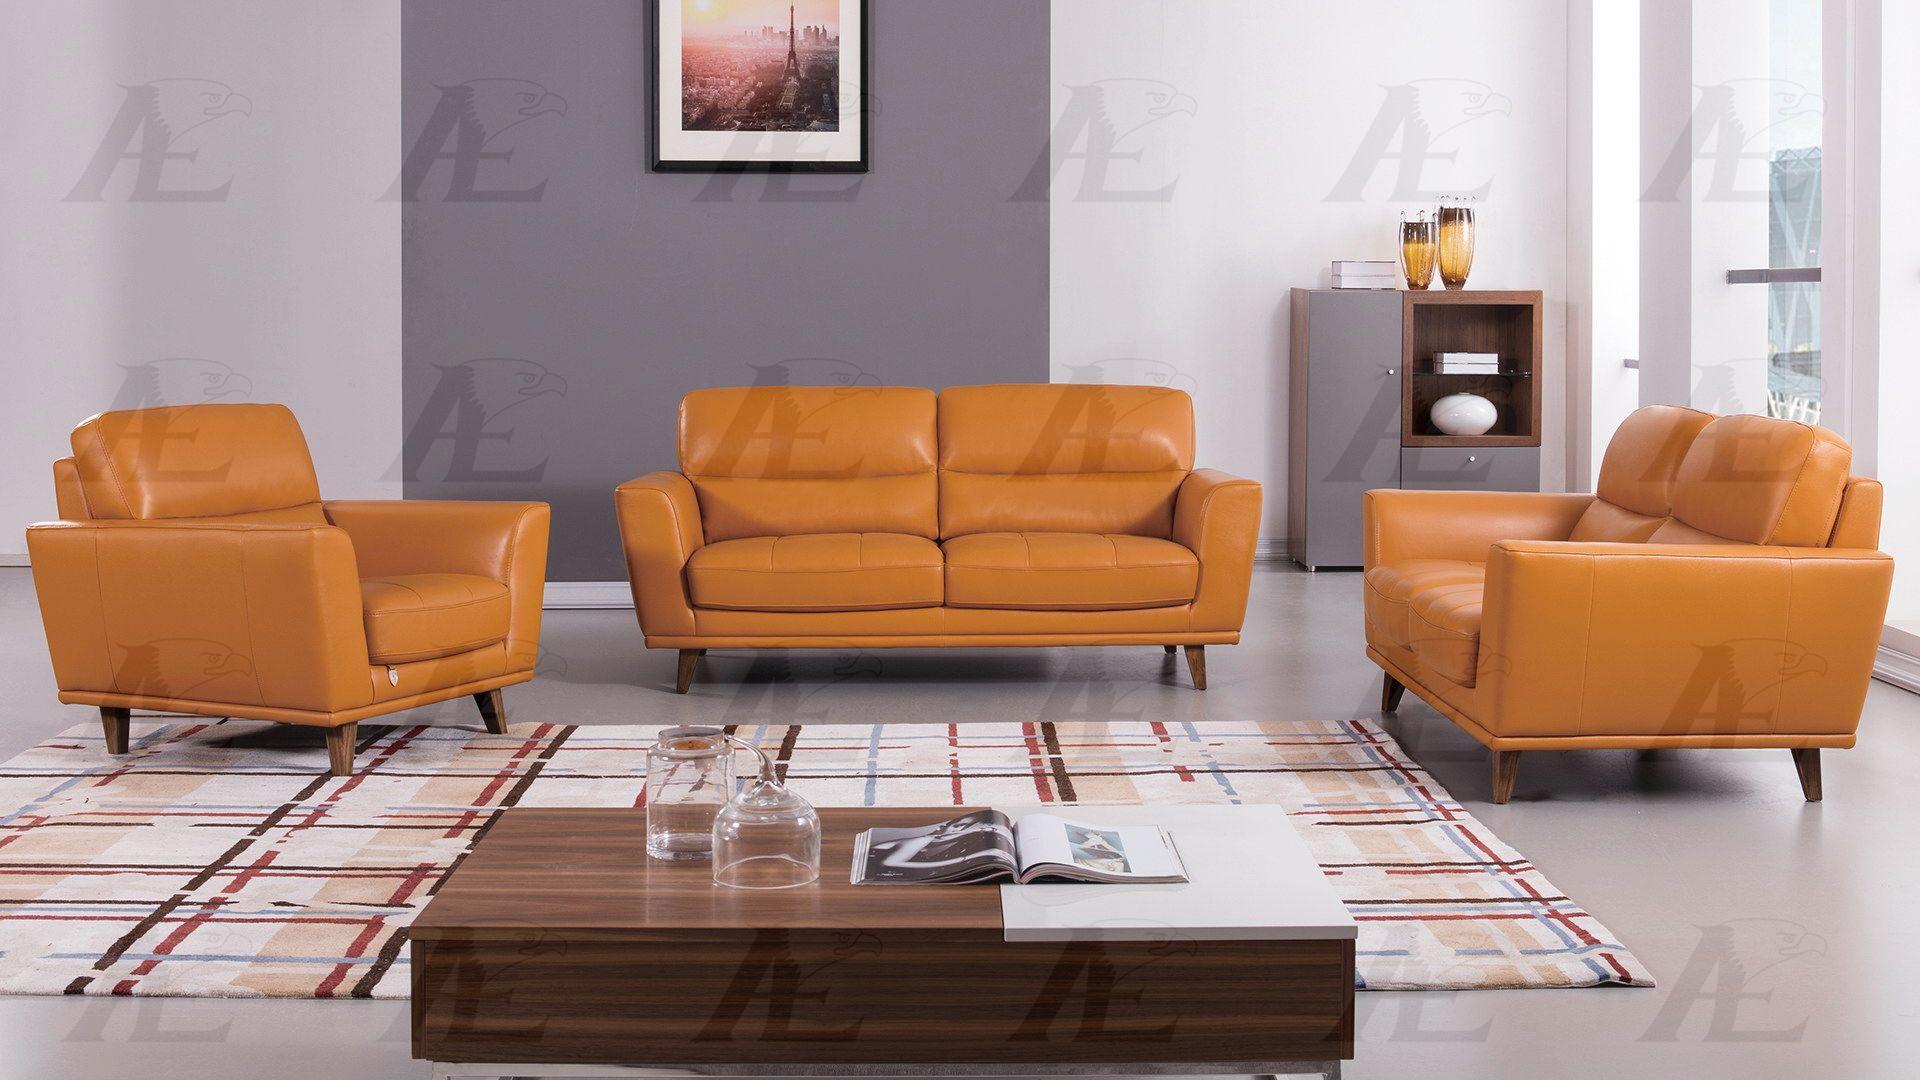 

    
American Eagle Furniture EK082-ORG Orange Sofa Loveseat and Chair Set Italian Leather 3Pcs
